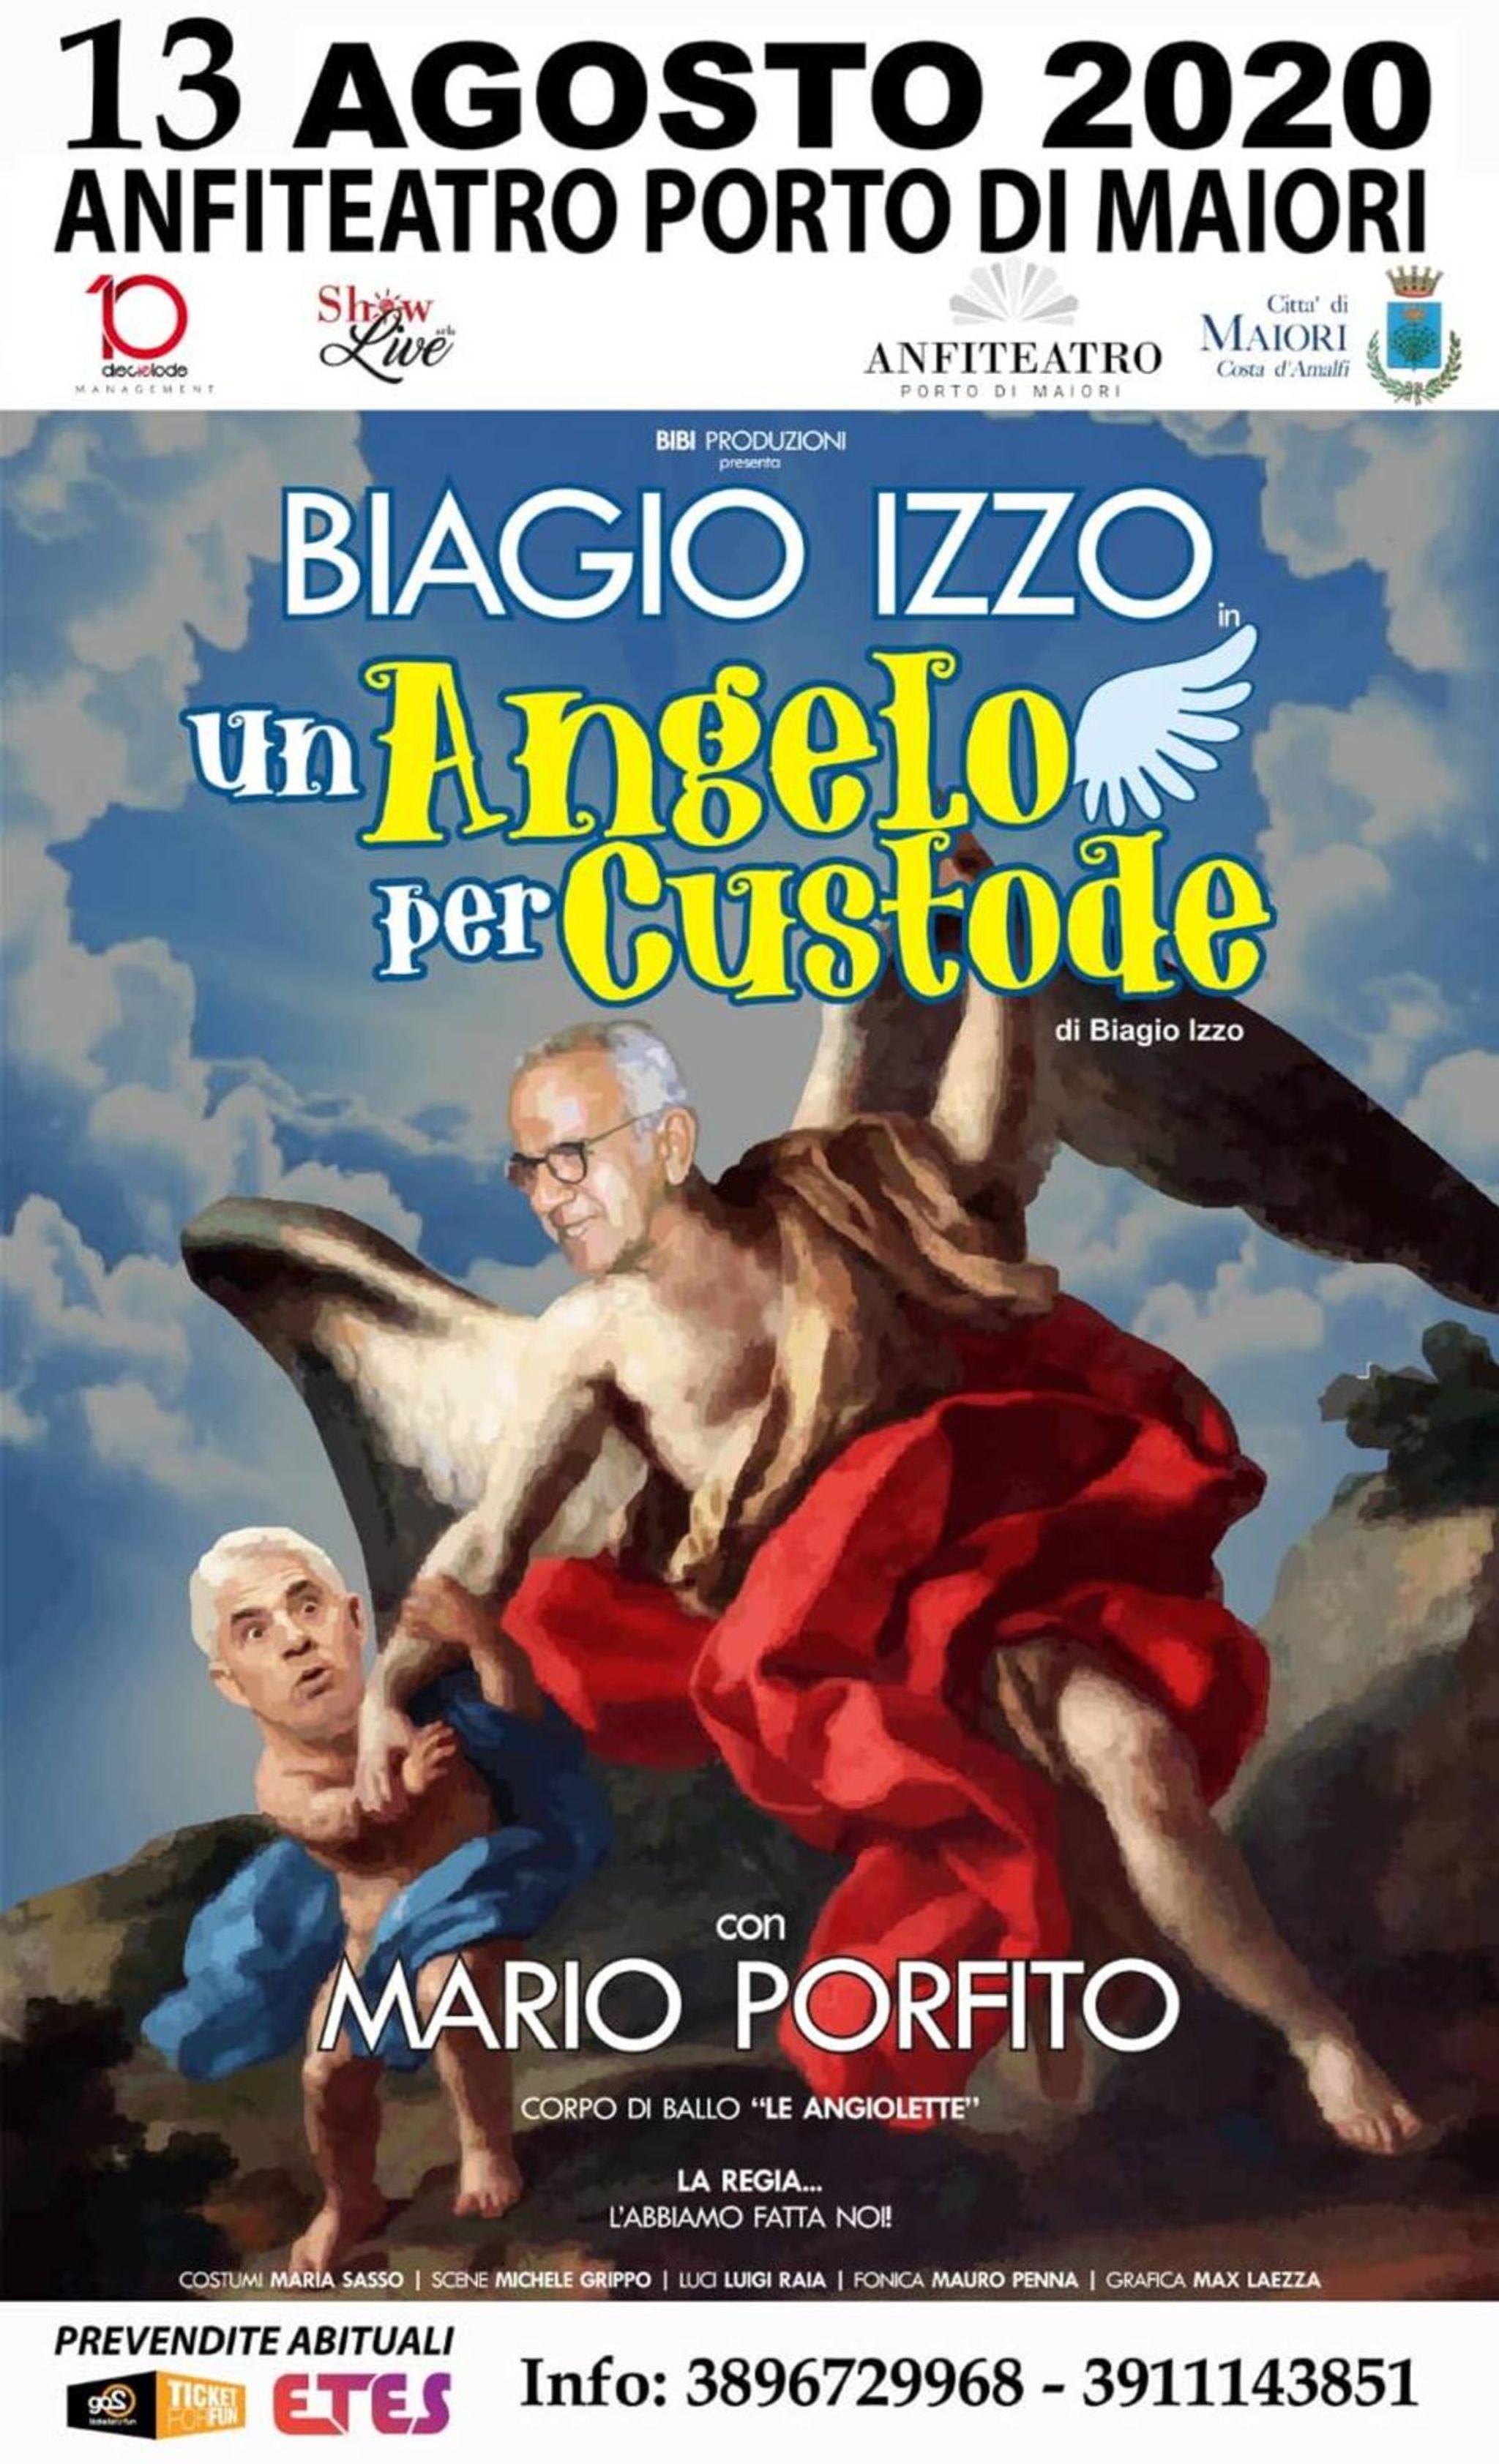 Biagio Izzo in "Un angelo per Custode"